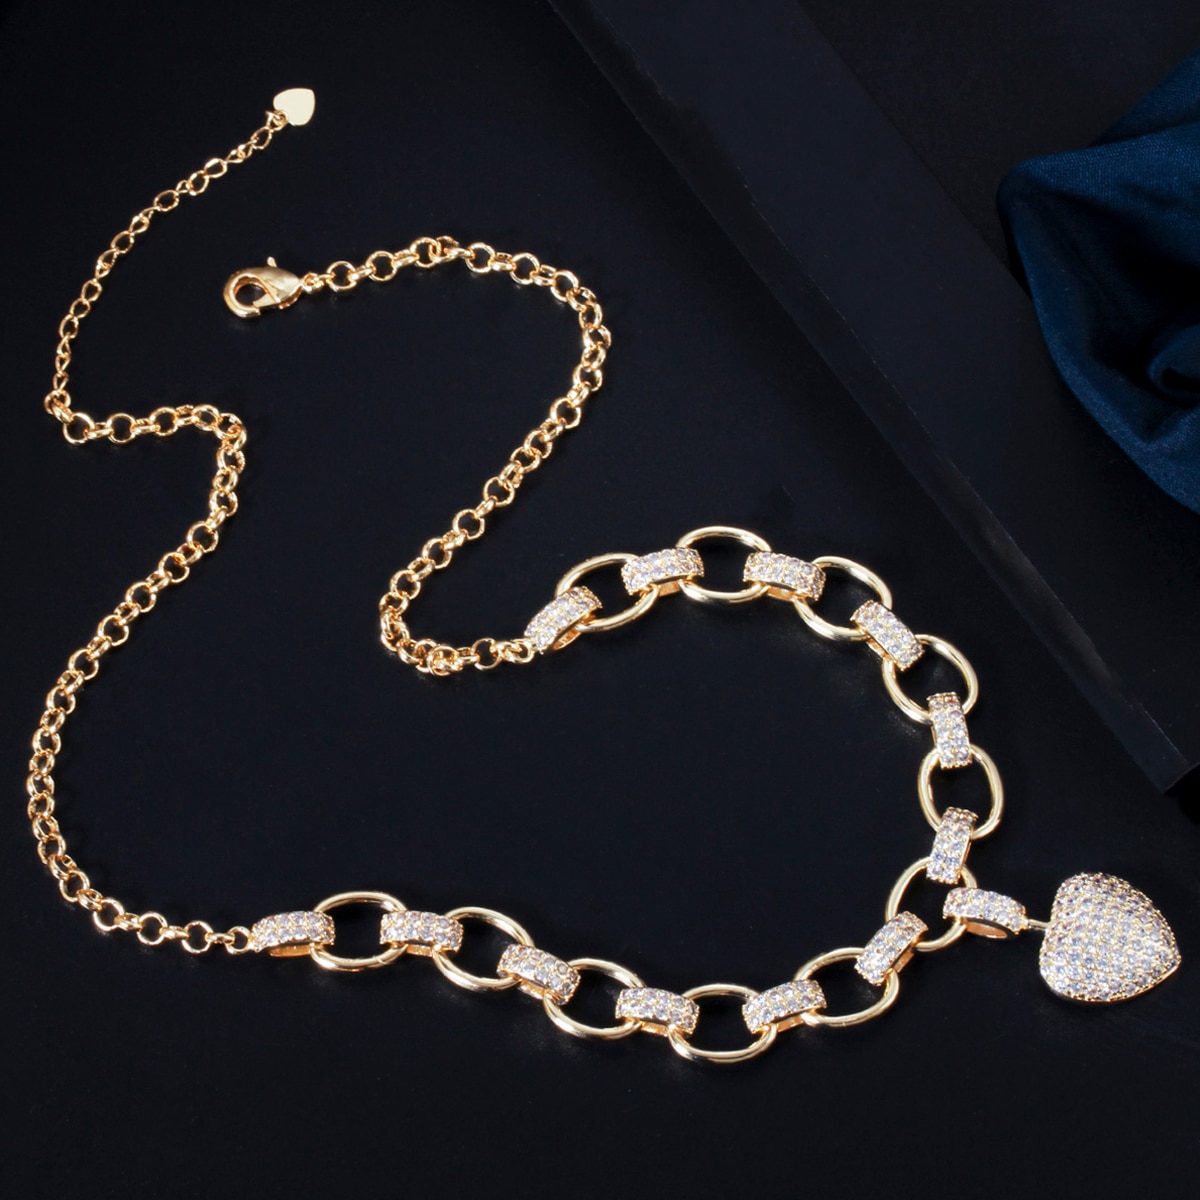 ThreeGraces-Luxury-Cubic-Zirconia-Stone-Yellow-Gold-Color-Love-Heart-Pendant-Necklace-Bracelet-Set-f-1005003297996366-9